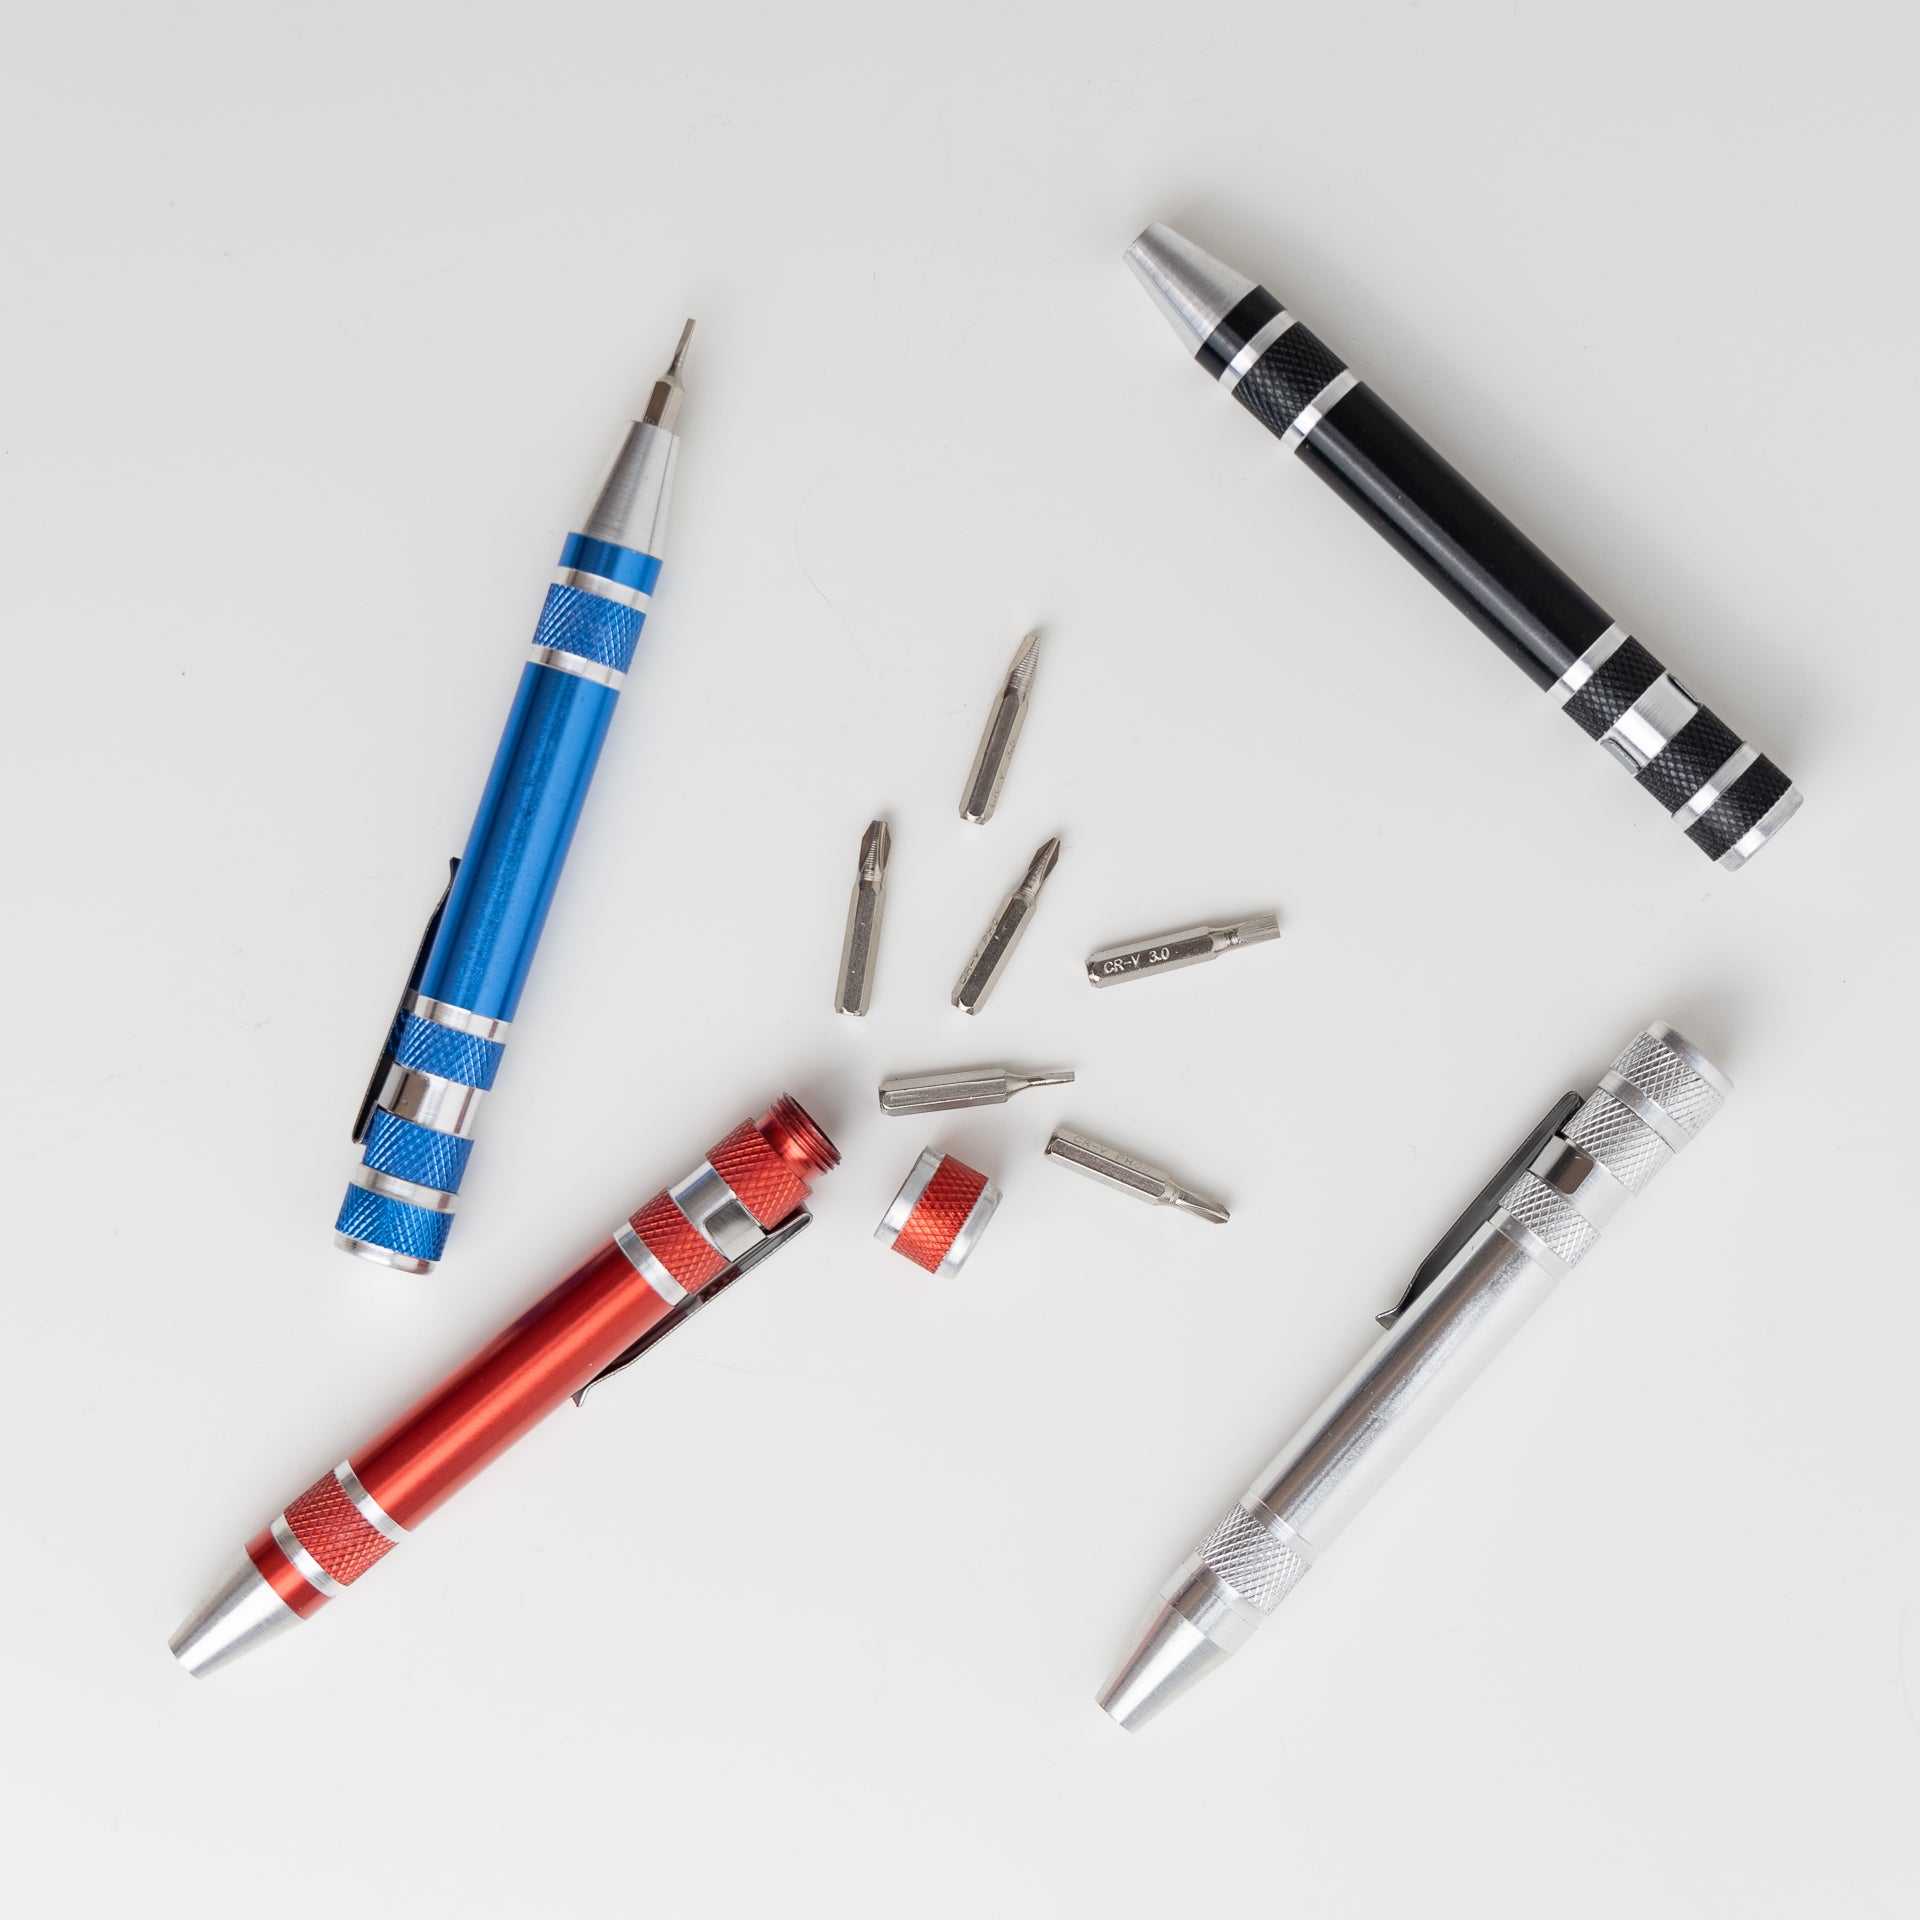 8-in-1 Precision Screwdriver Pen Tool